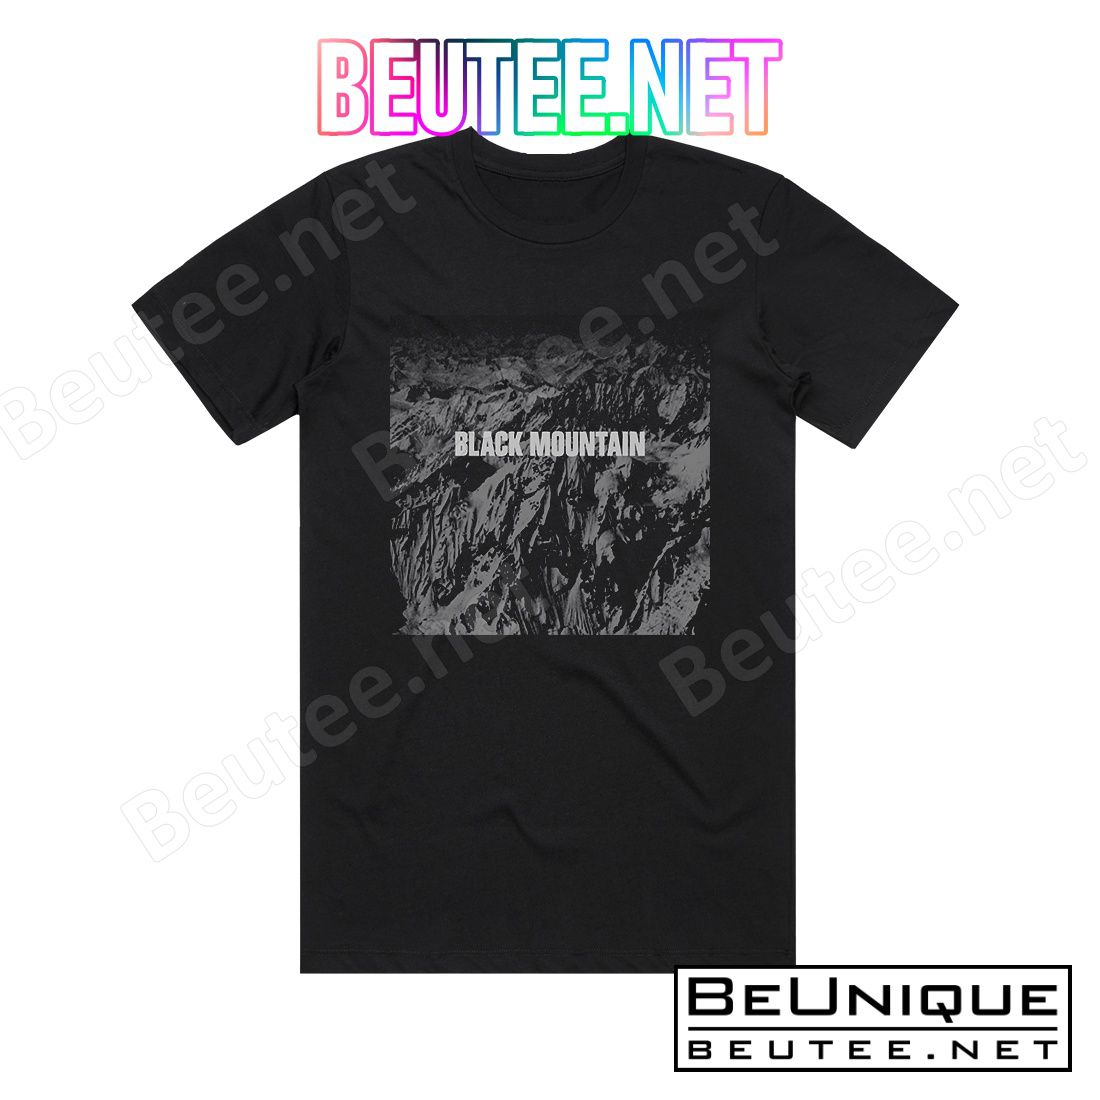 Black Mountain Mountain Album Cover T-Shirt